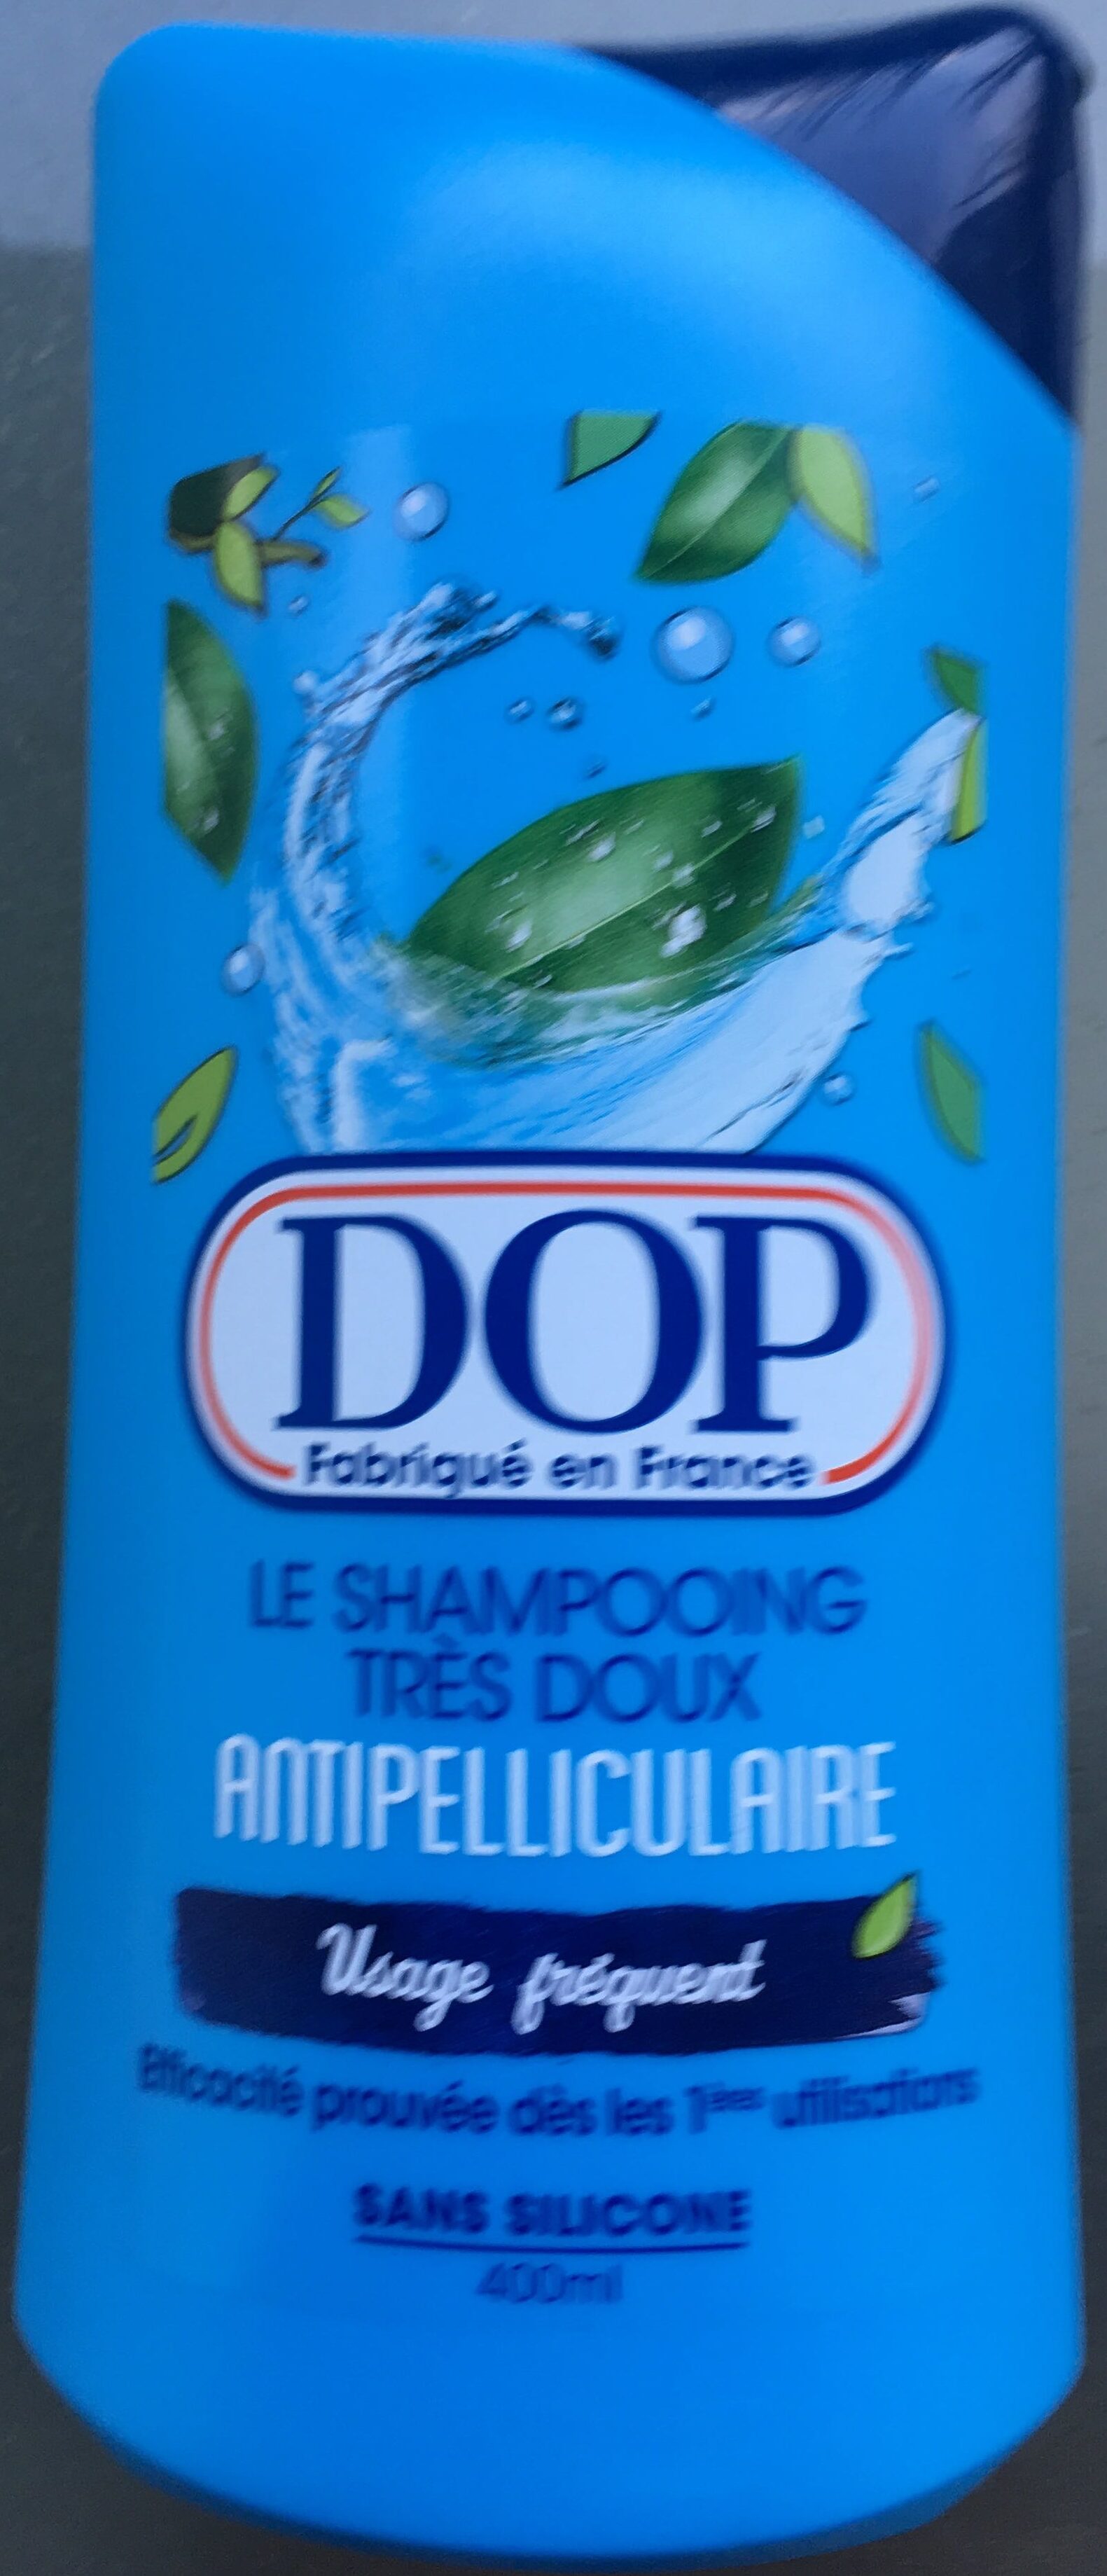 Le Shampooing Très Doux Antipelliculaire - Product - fr